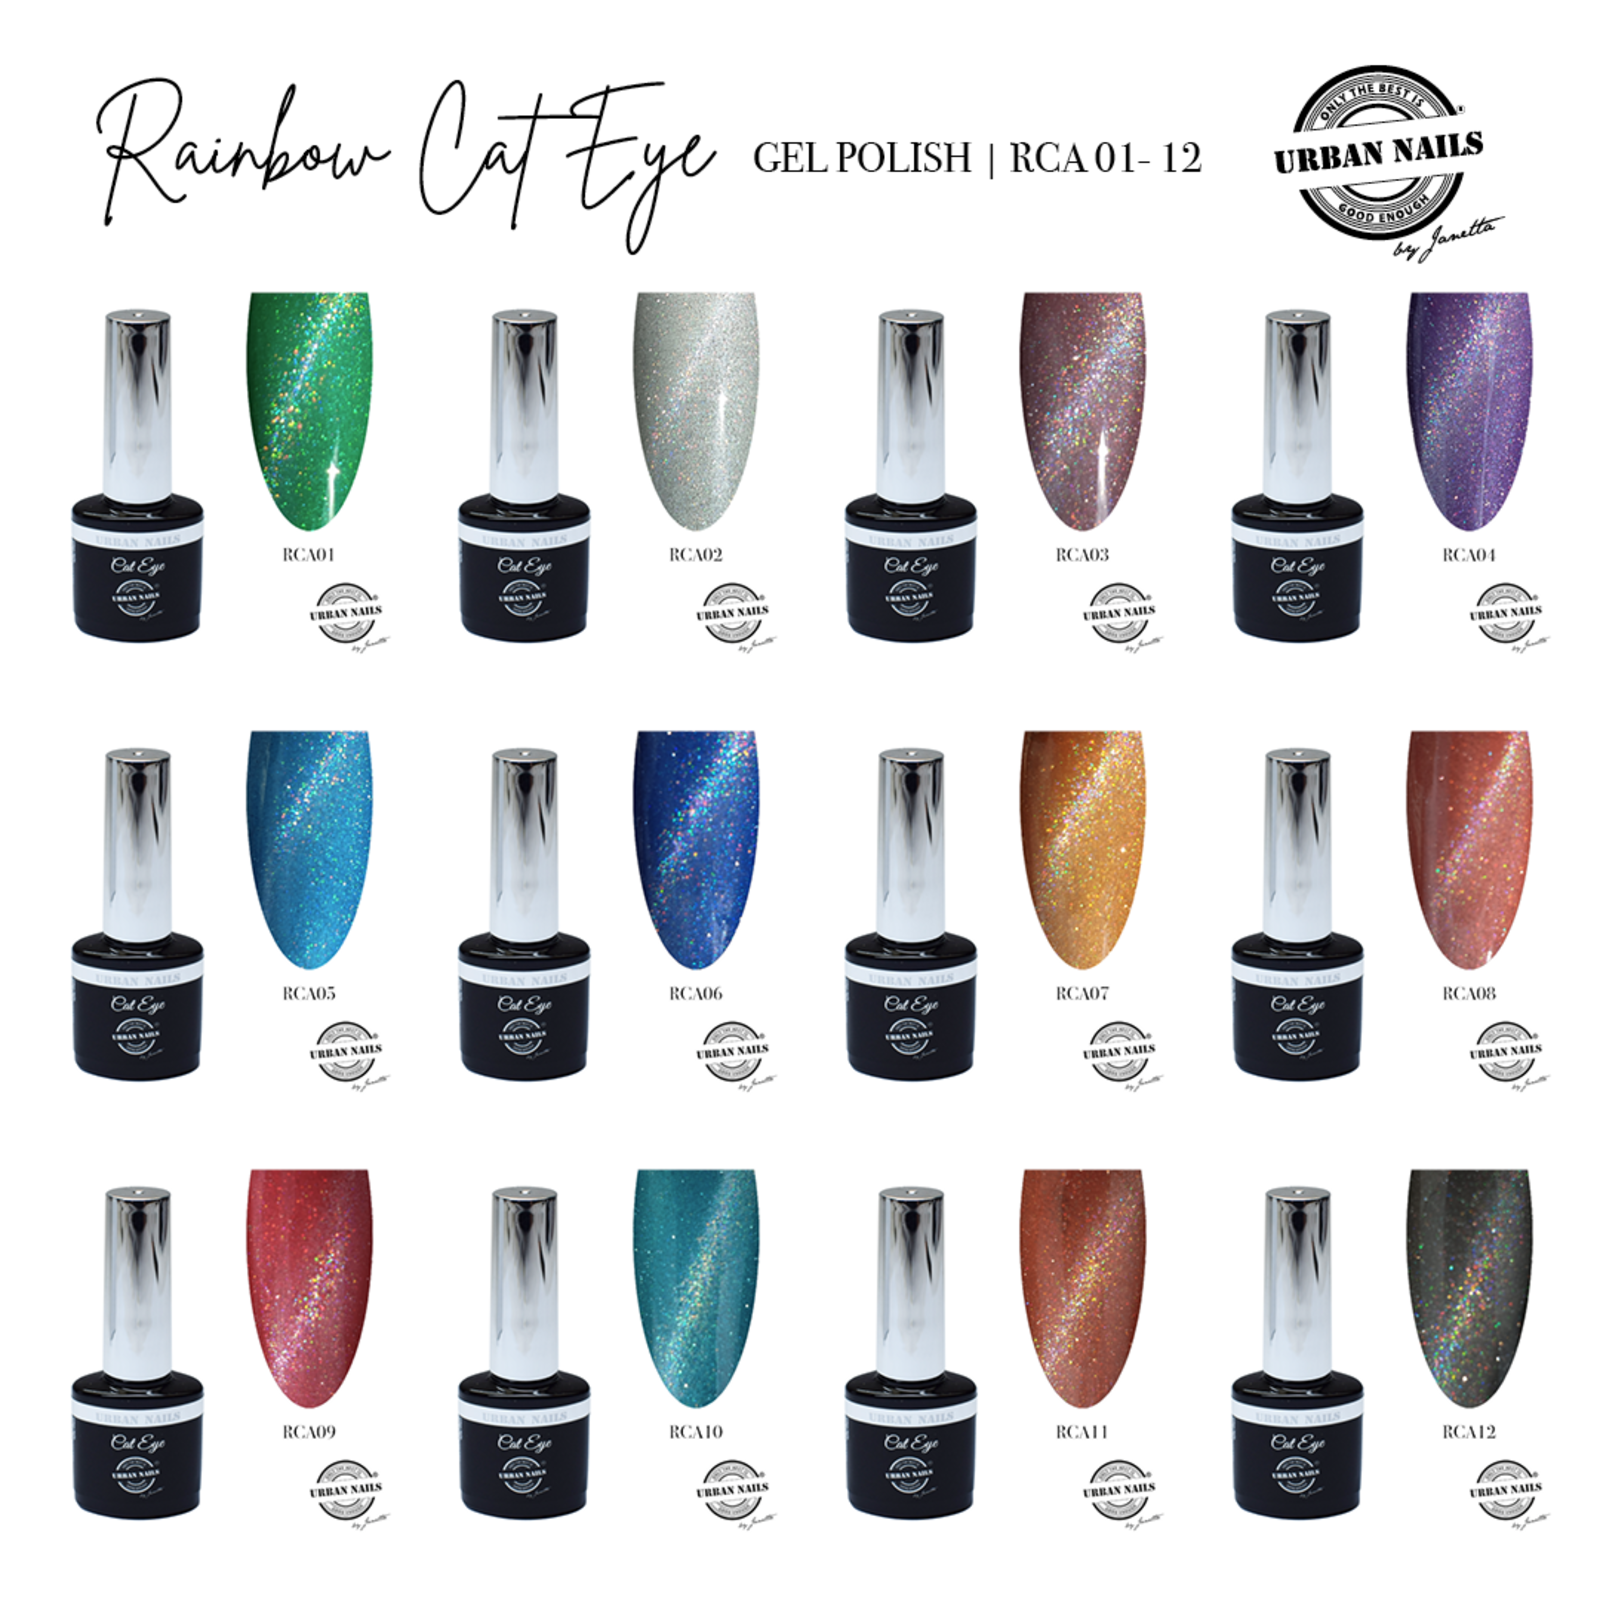 Urban nails Rainbow Cat eye RCA-01